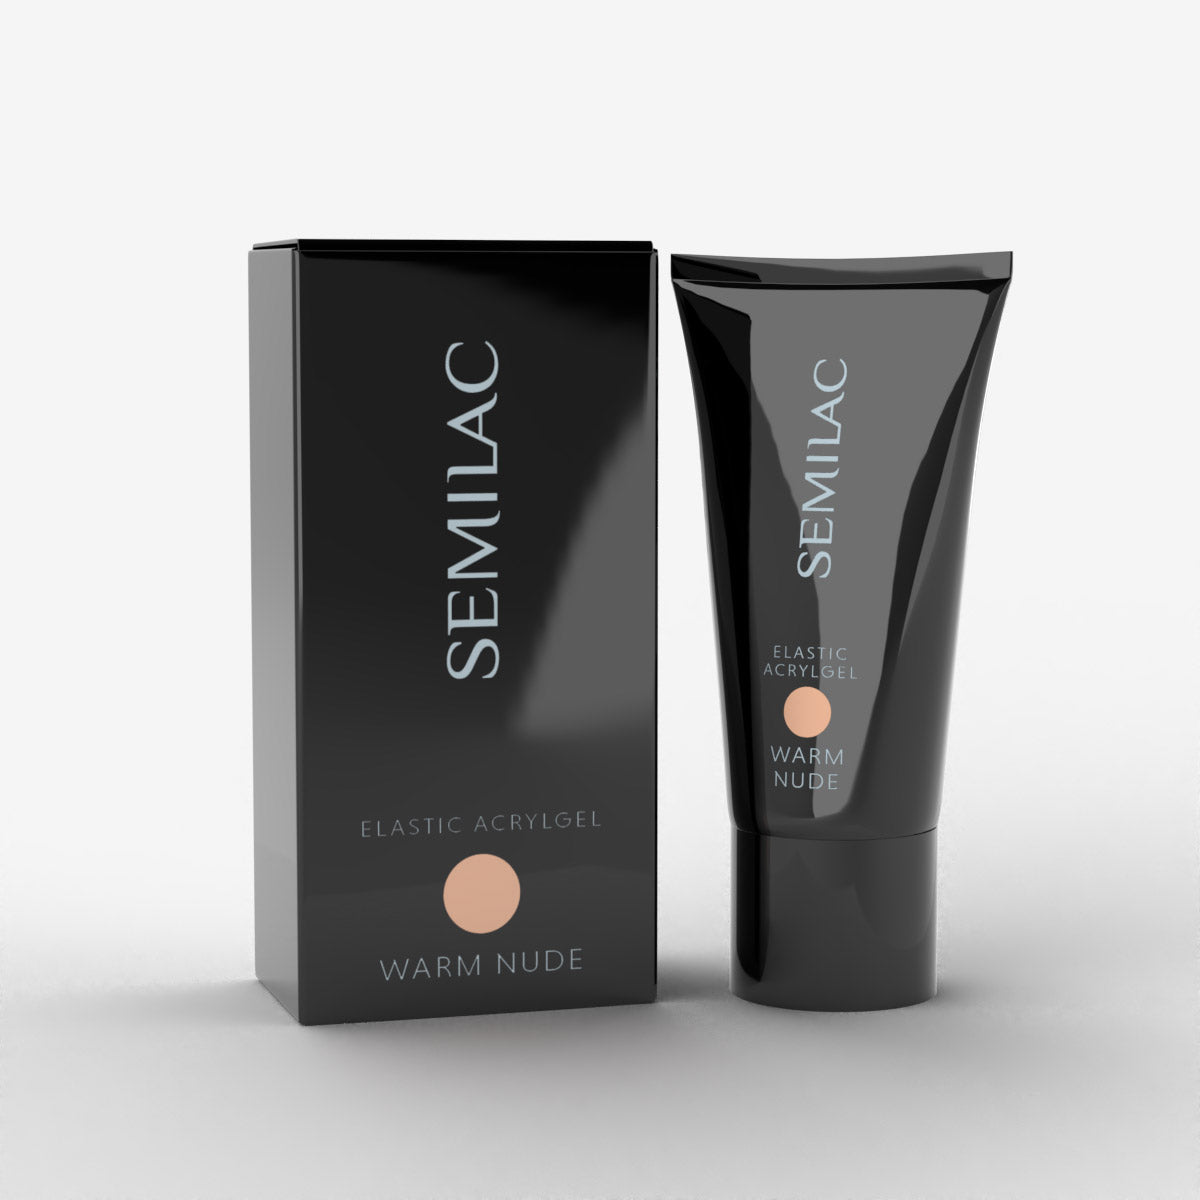 Semilac Elastic Acrylgel Warm Nude 30g - Semilac UK